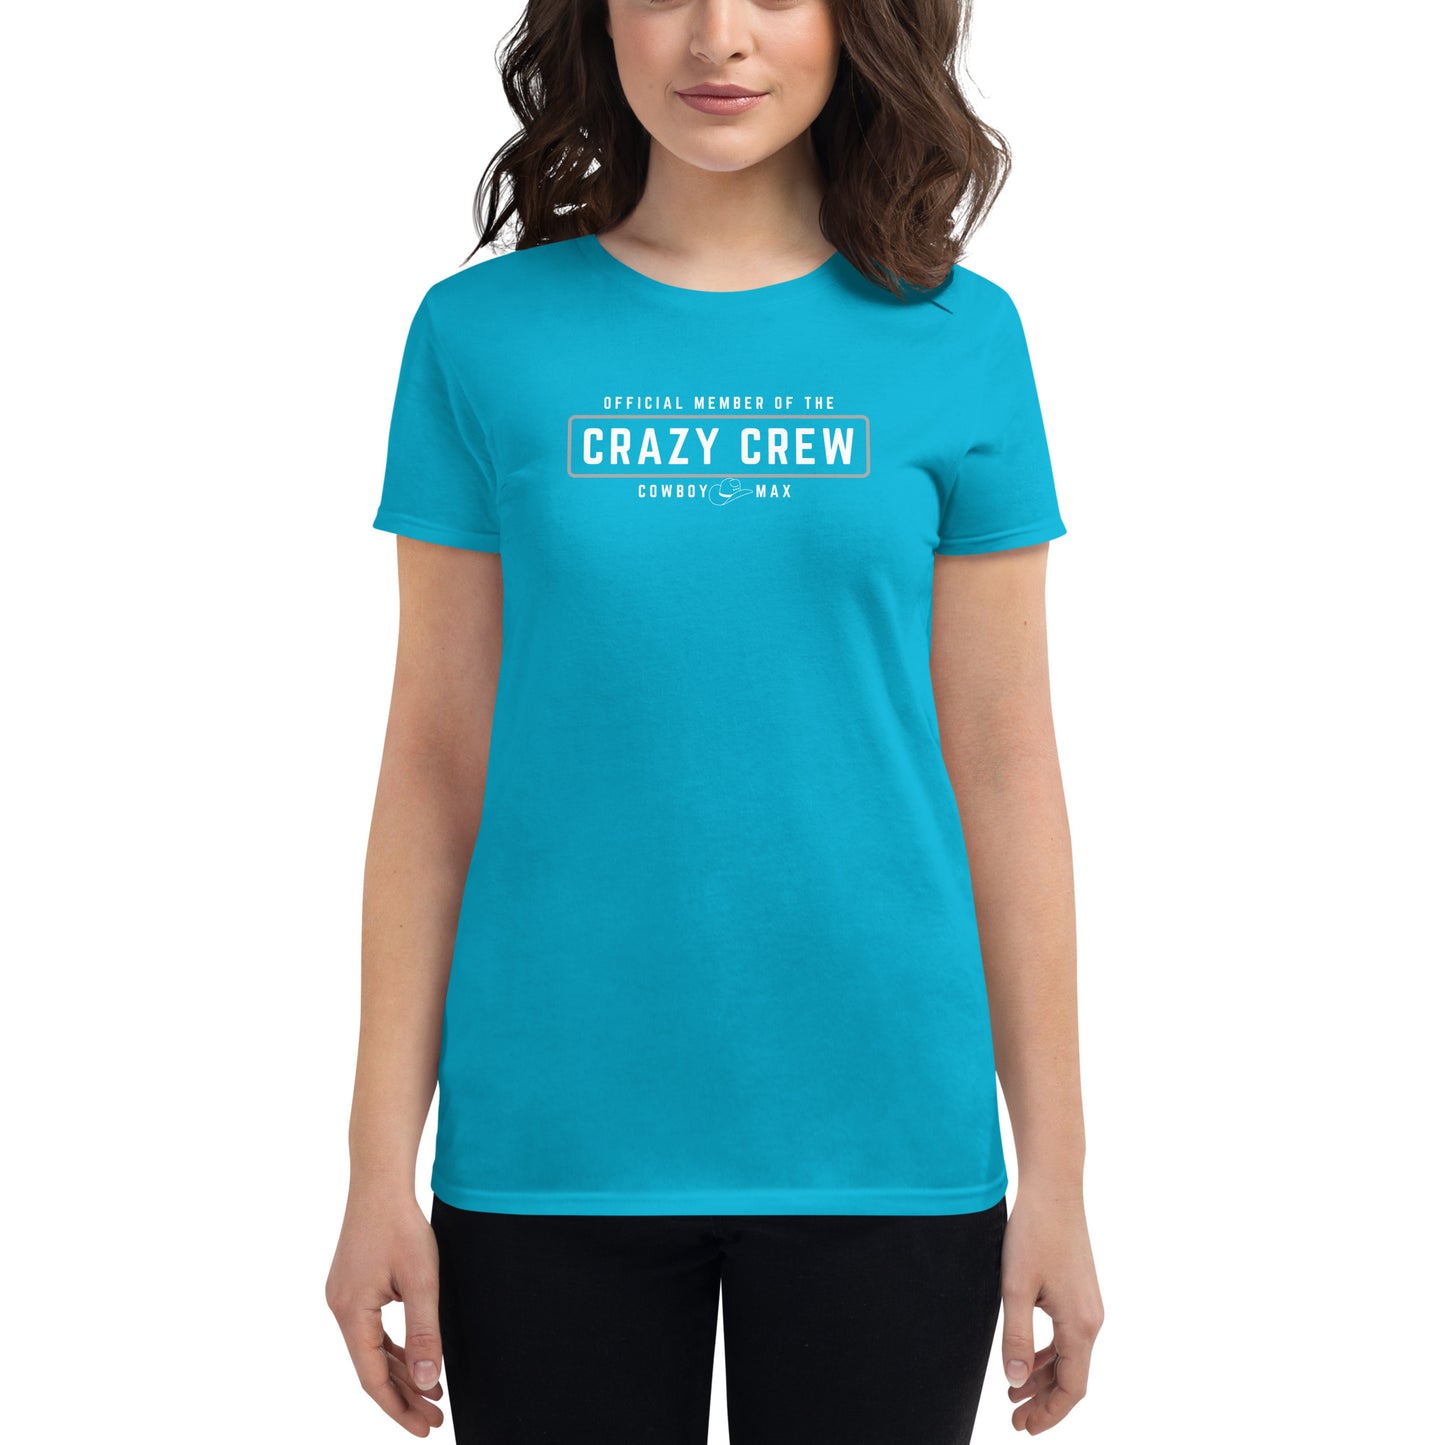 Member Of The Crazy Crew: Women's Short Sleeve T-shirt